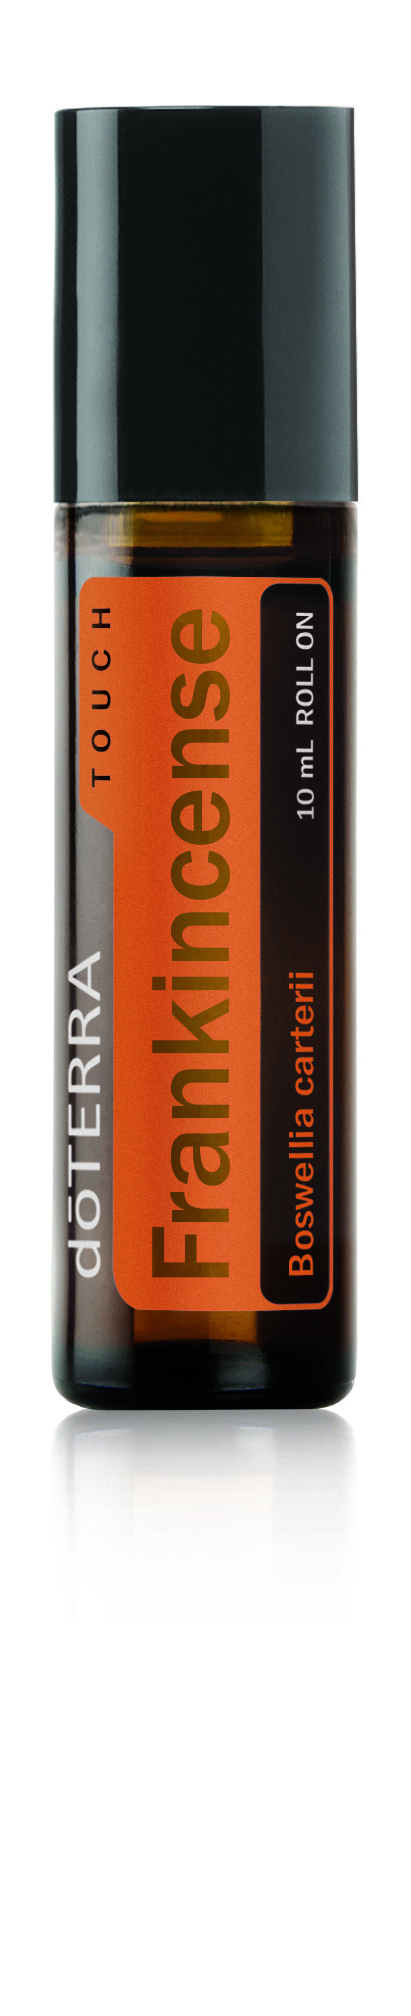 doTERRA Frankincense Touch Blend Oil | dōTERRA Essential Oils